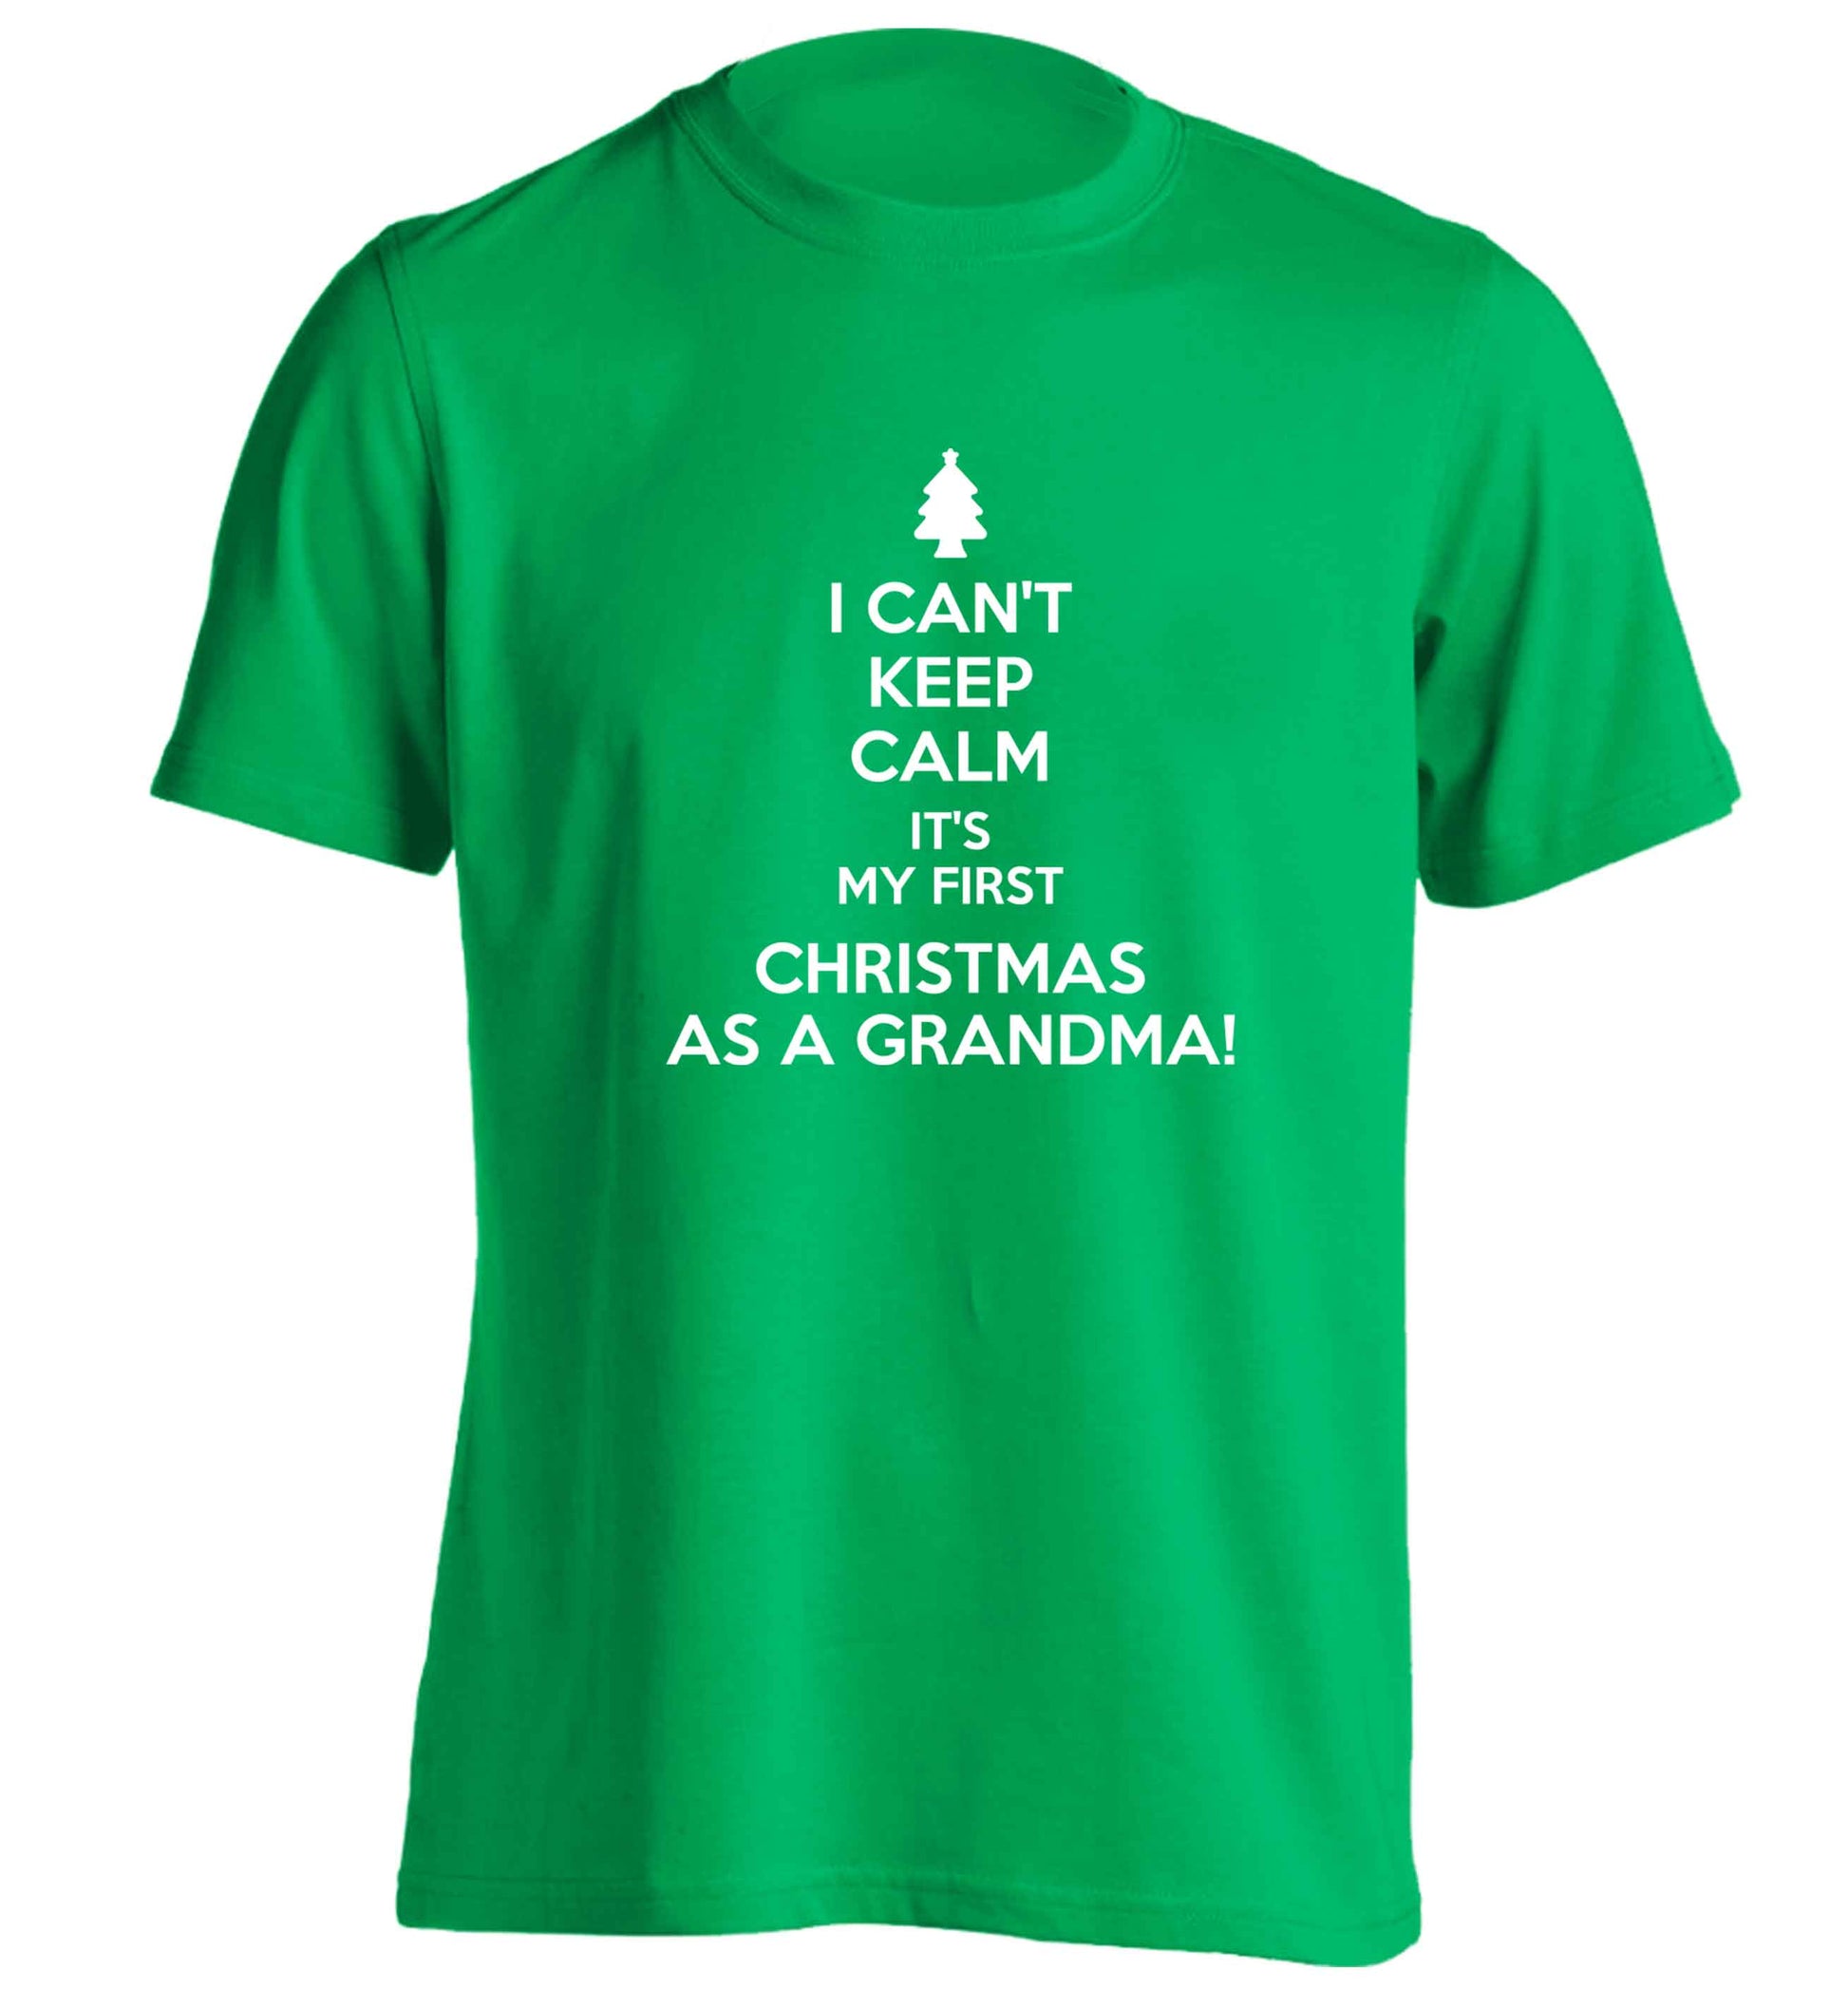 I can't keep calm it's my first Christmas as a grandma! adults unisex green Tshirt 2XL